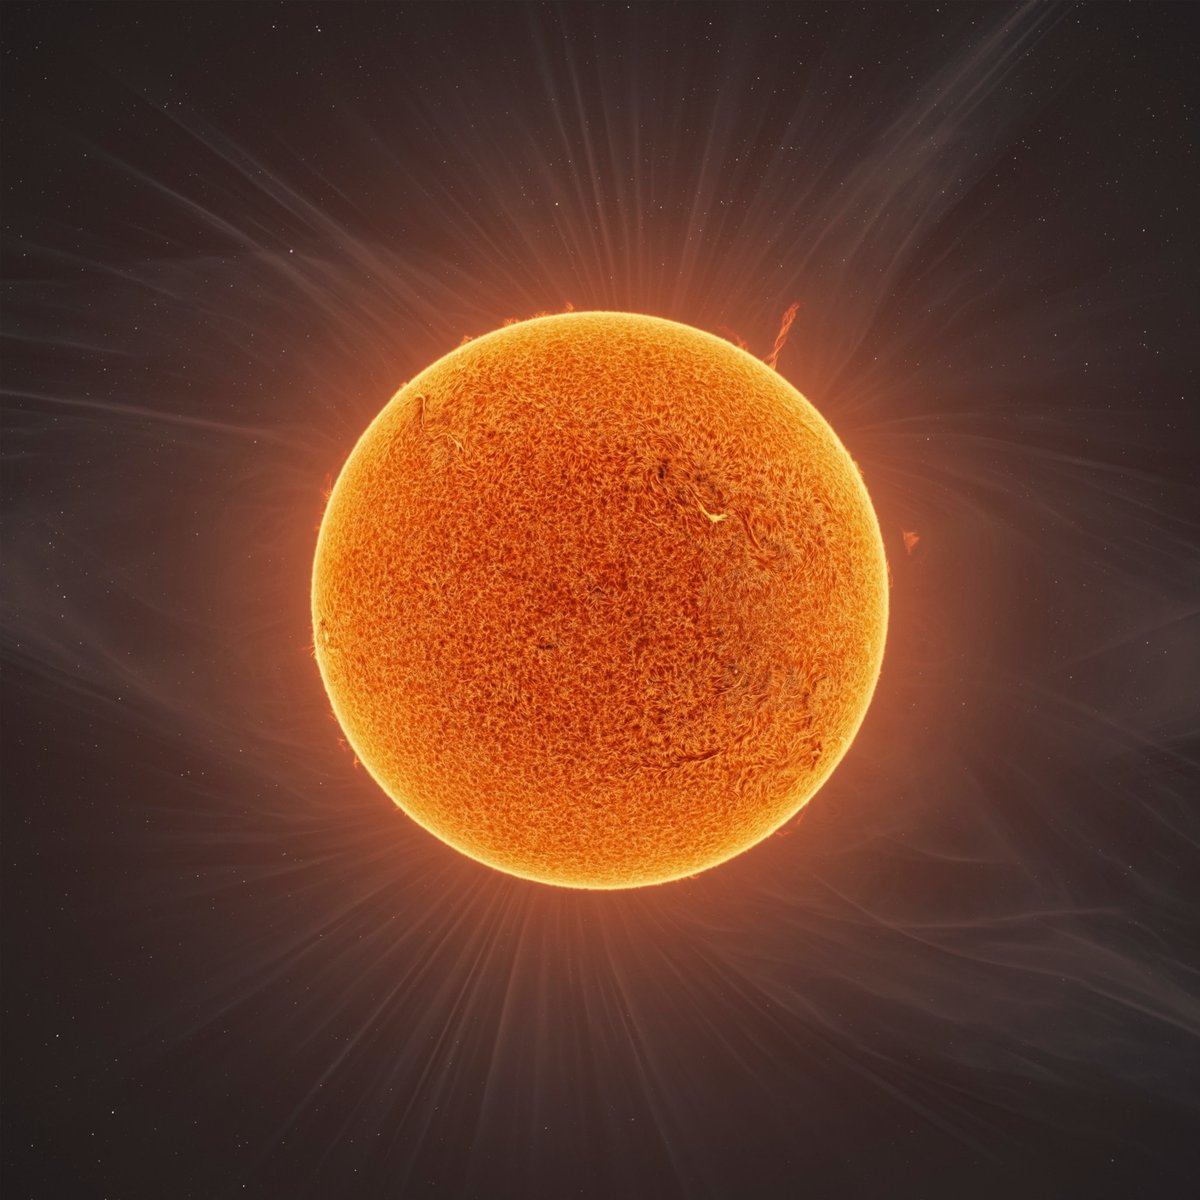 astounding image of the Sun